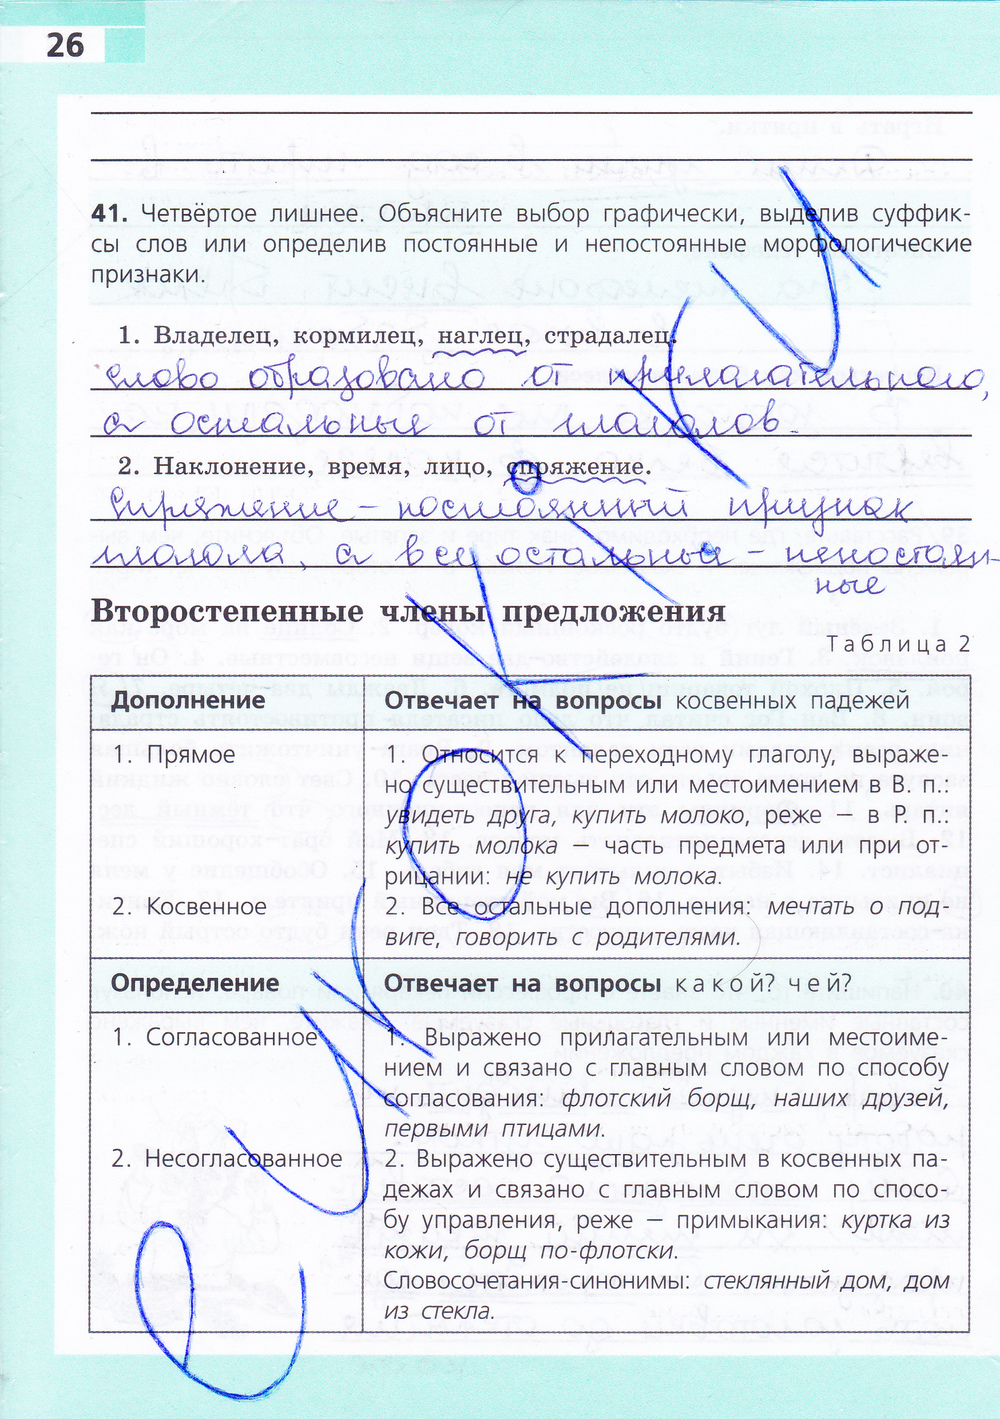 Гдз по русскому рабочая тетрадь а.б малюшкин 6 класс онлайн